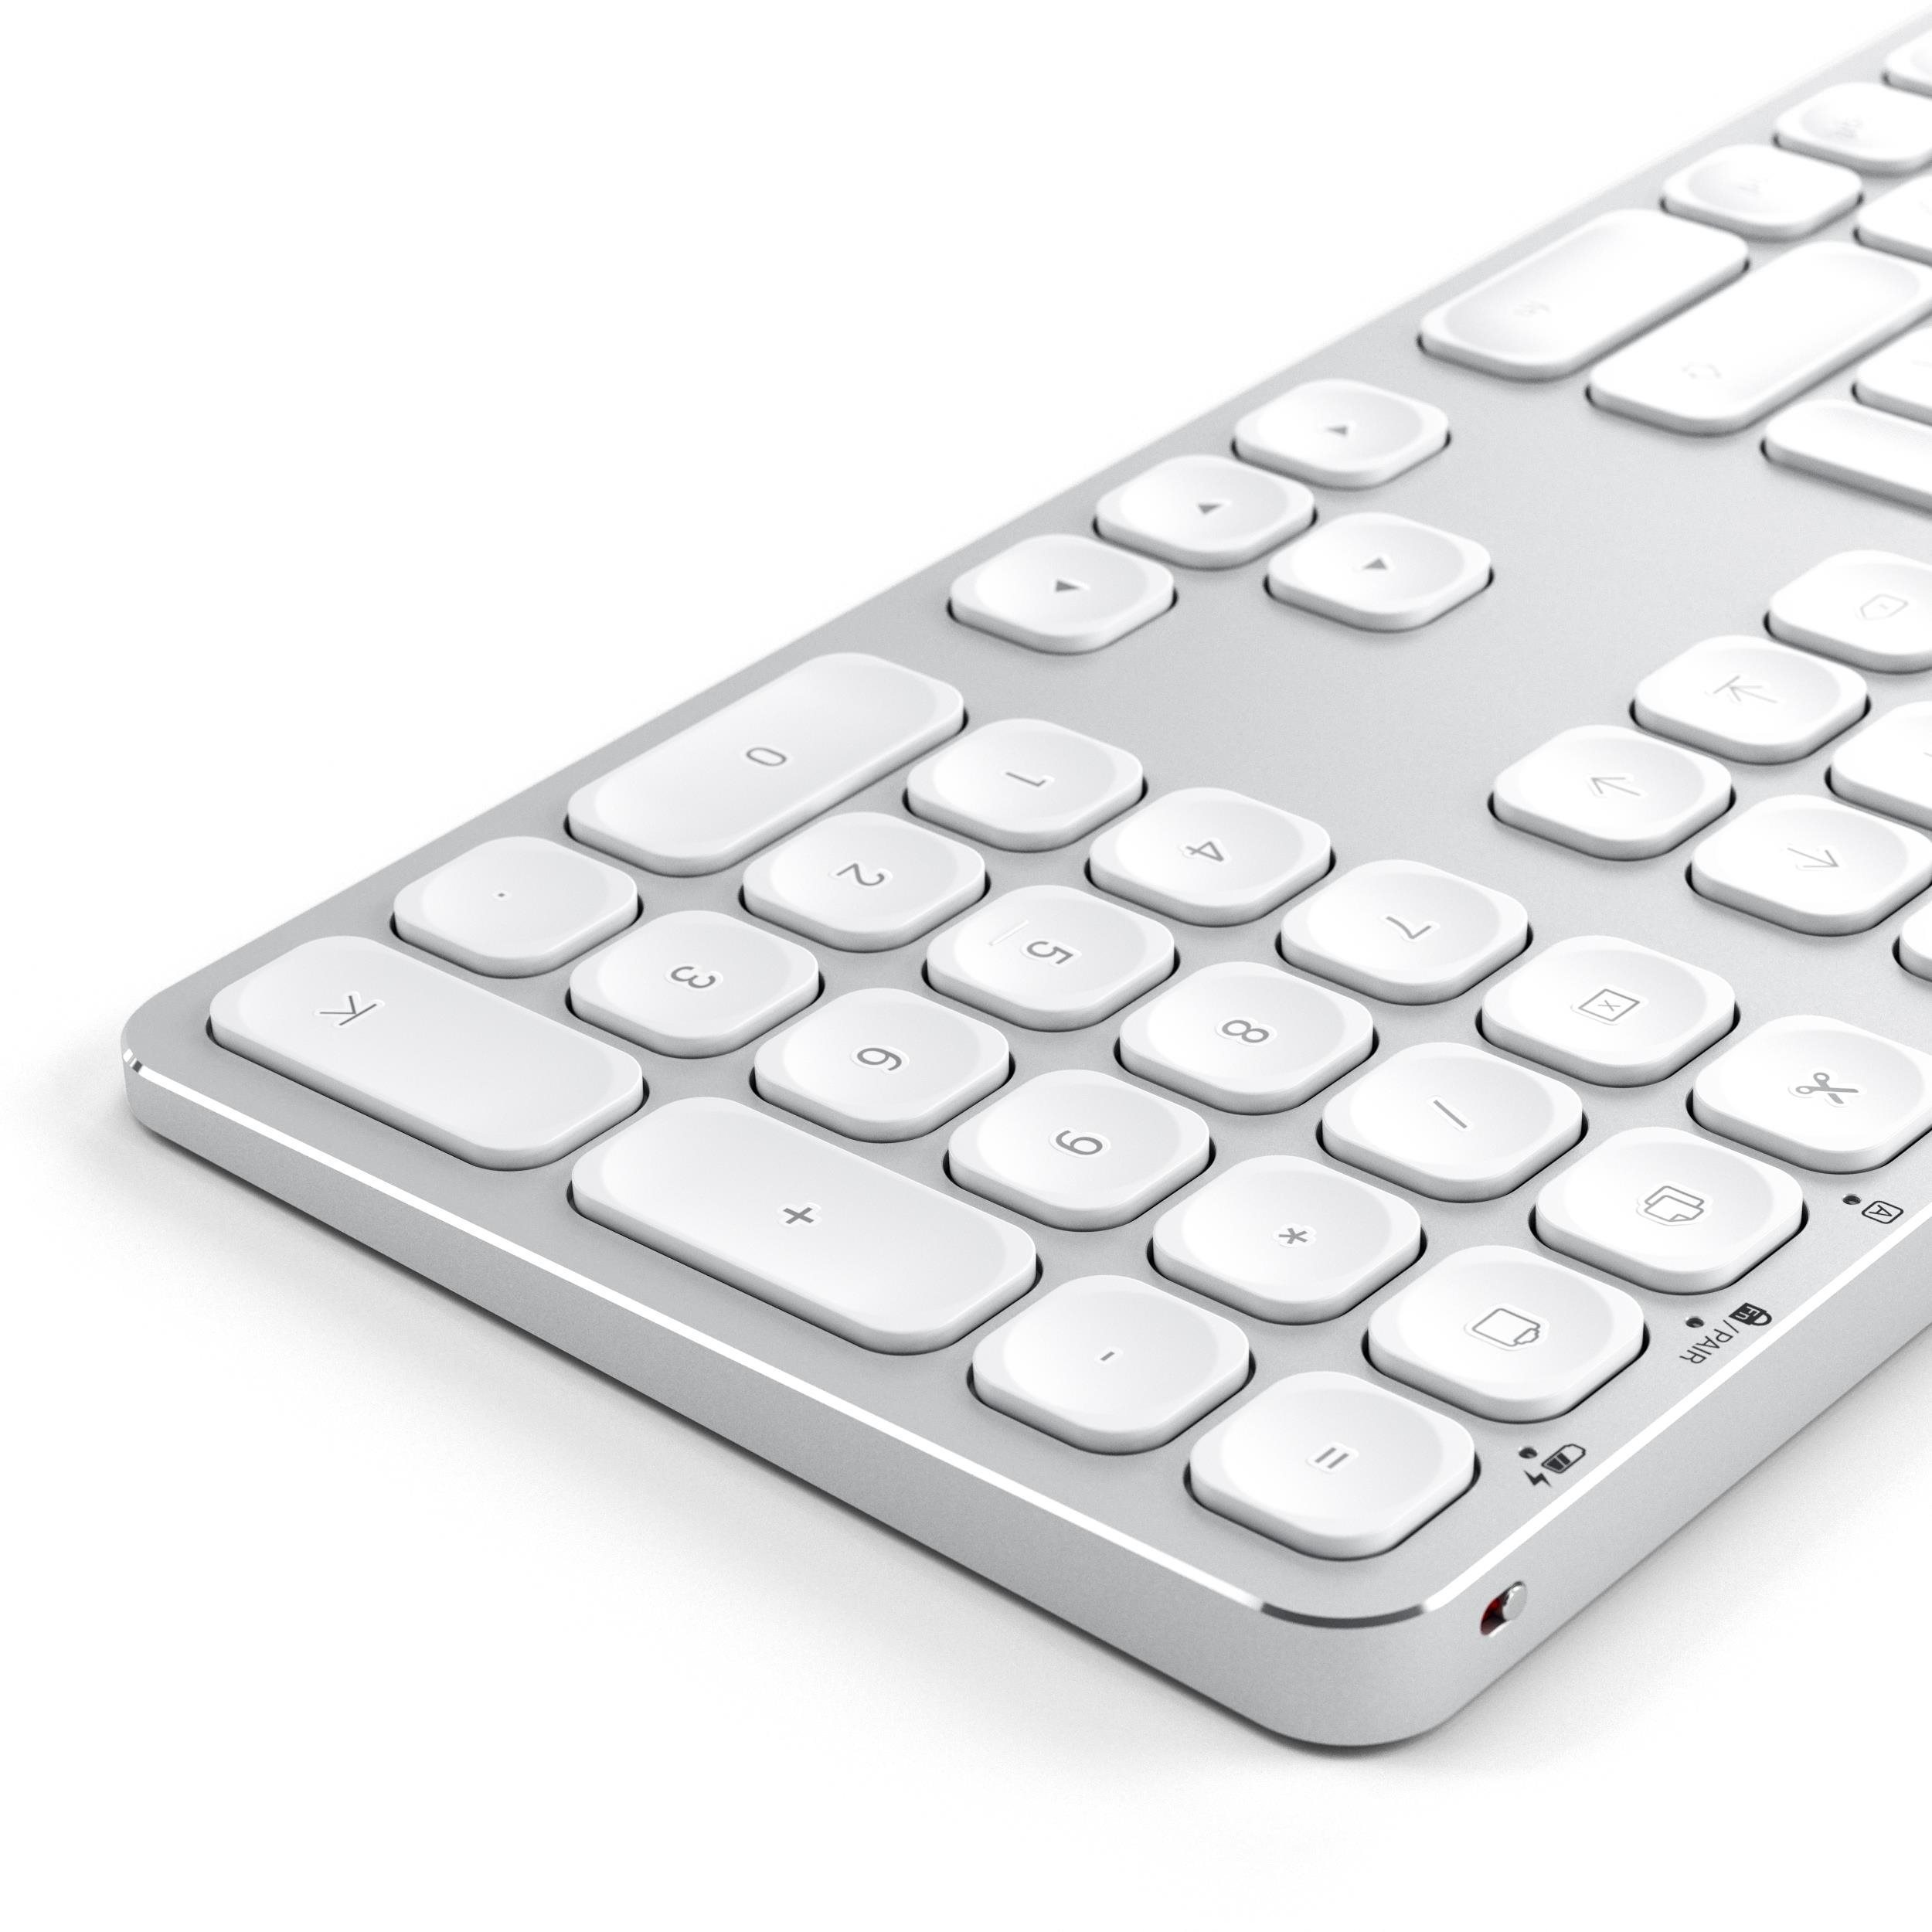 Keyboard Satechi Aluminium Bluetooth Wireless Keyboard for Mac - Silver - US Features/technology